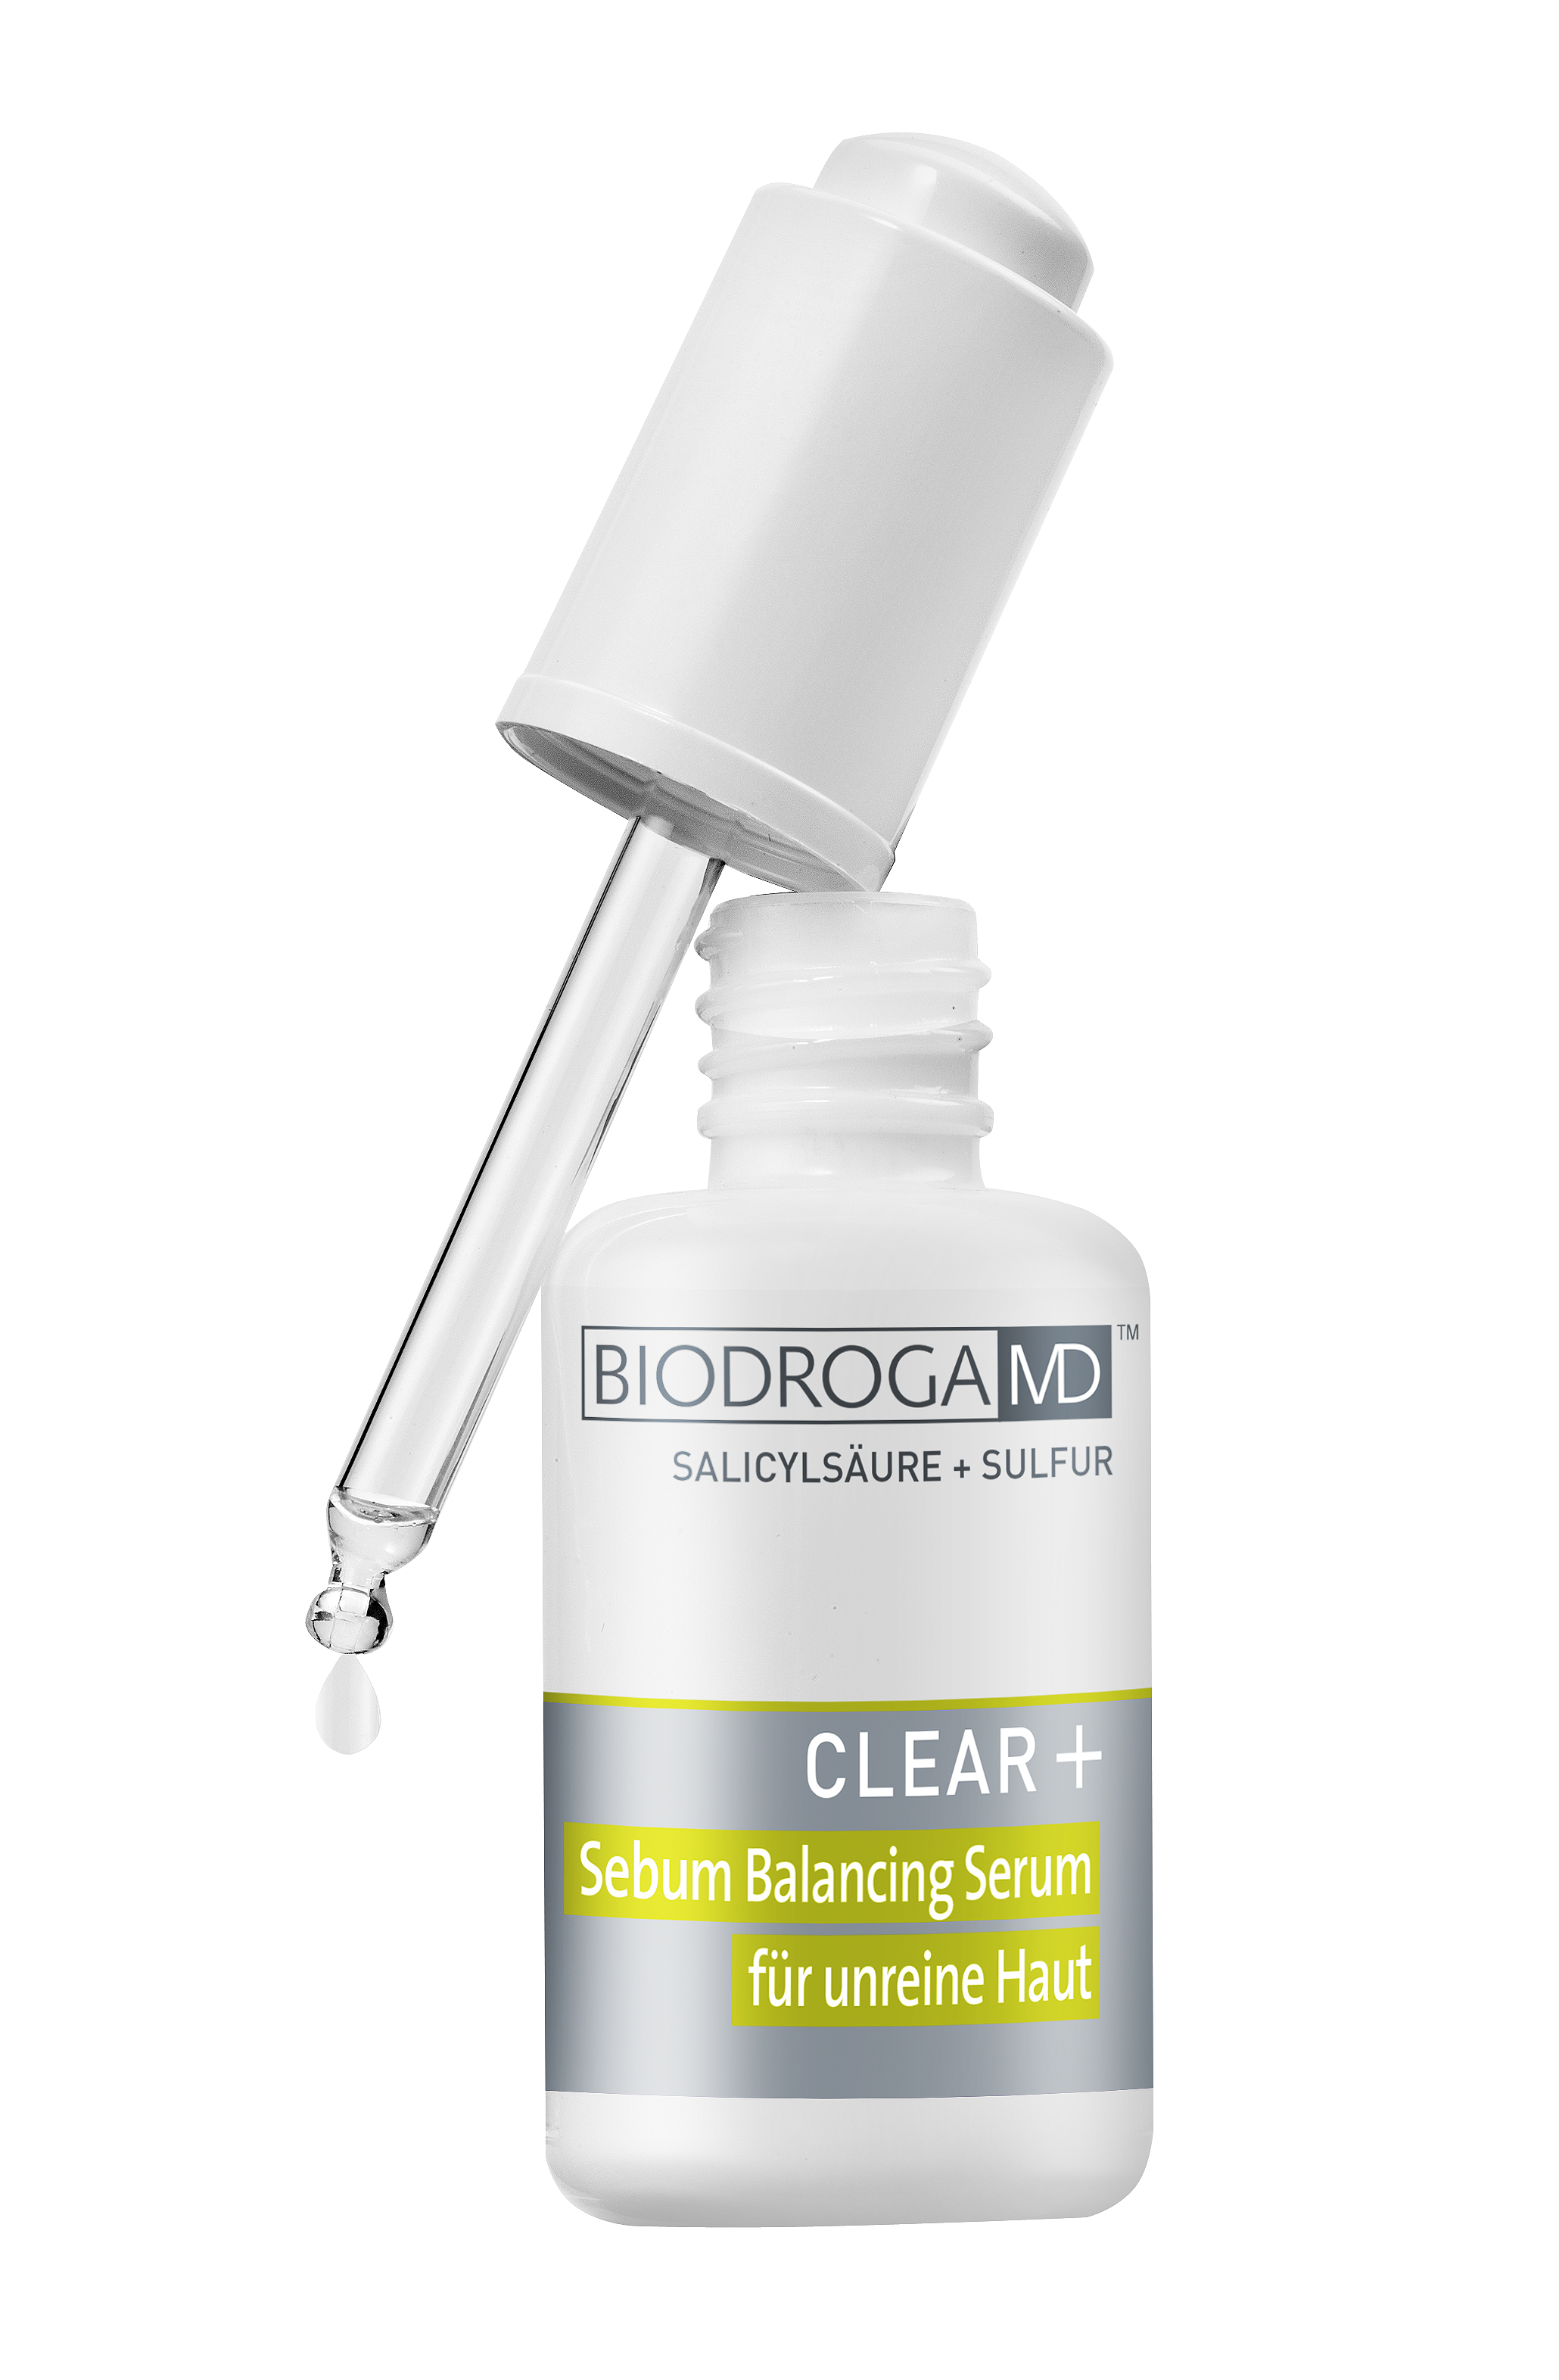 Biodroga MD Clear+ Sebum Balancing Serum For Impure Skin 30ml